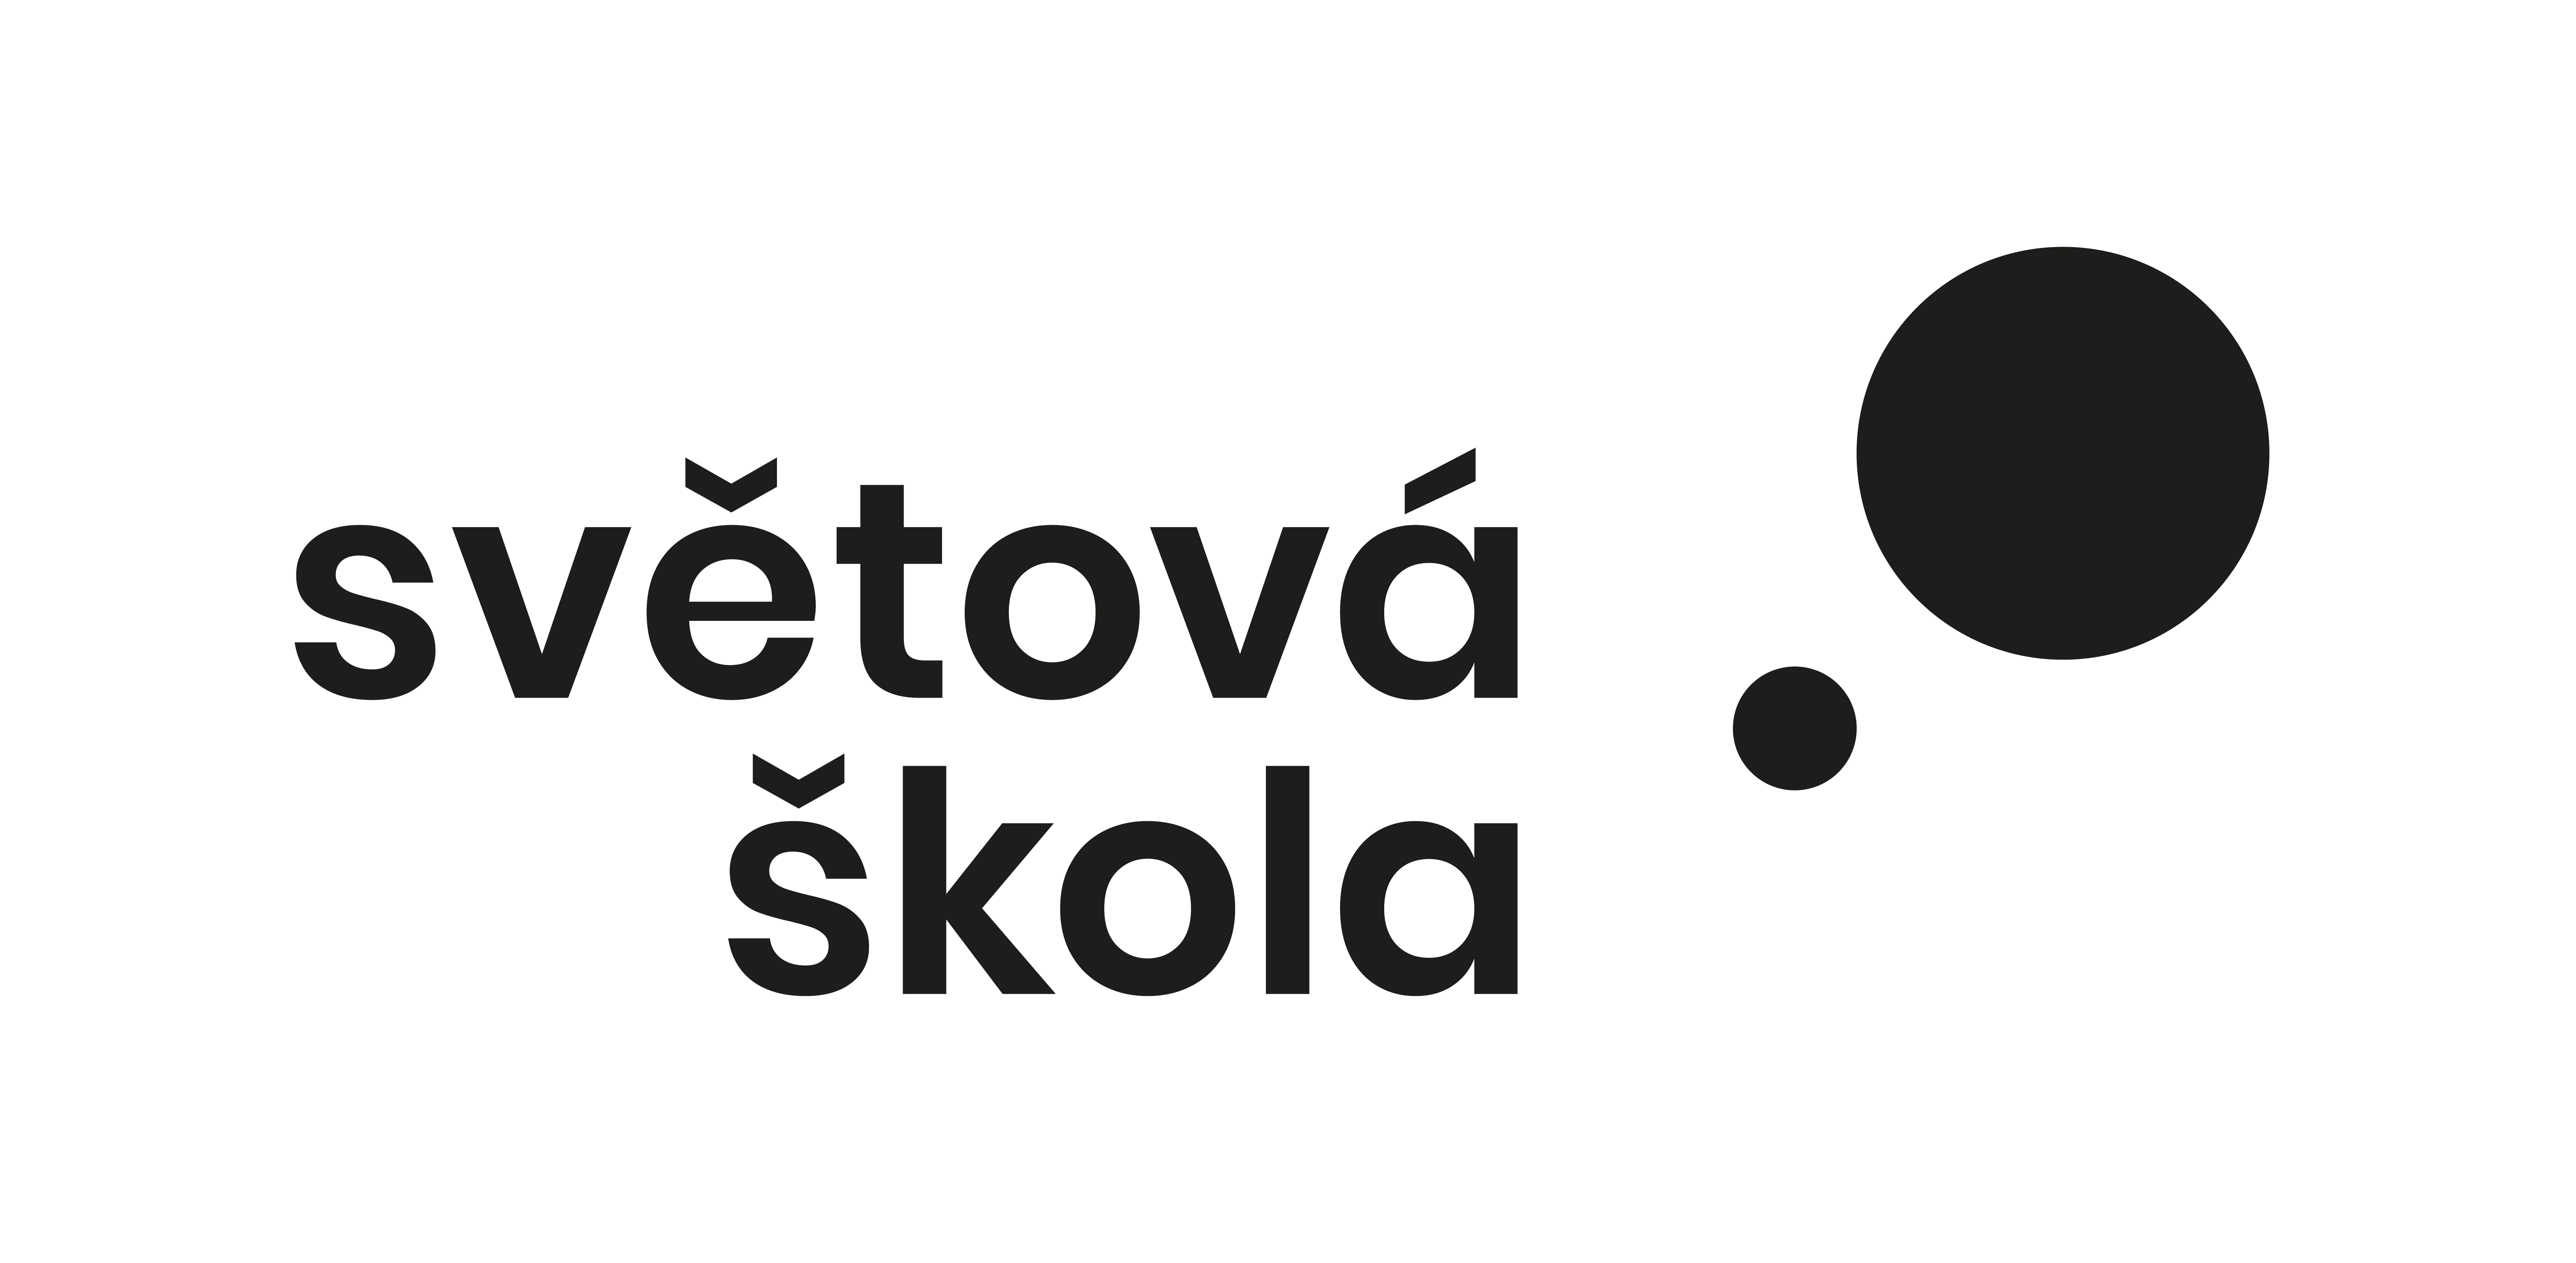 Svetova_skola_horizontalni_logo_cerna (1)